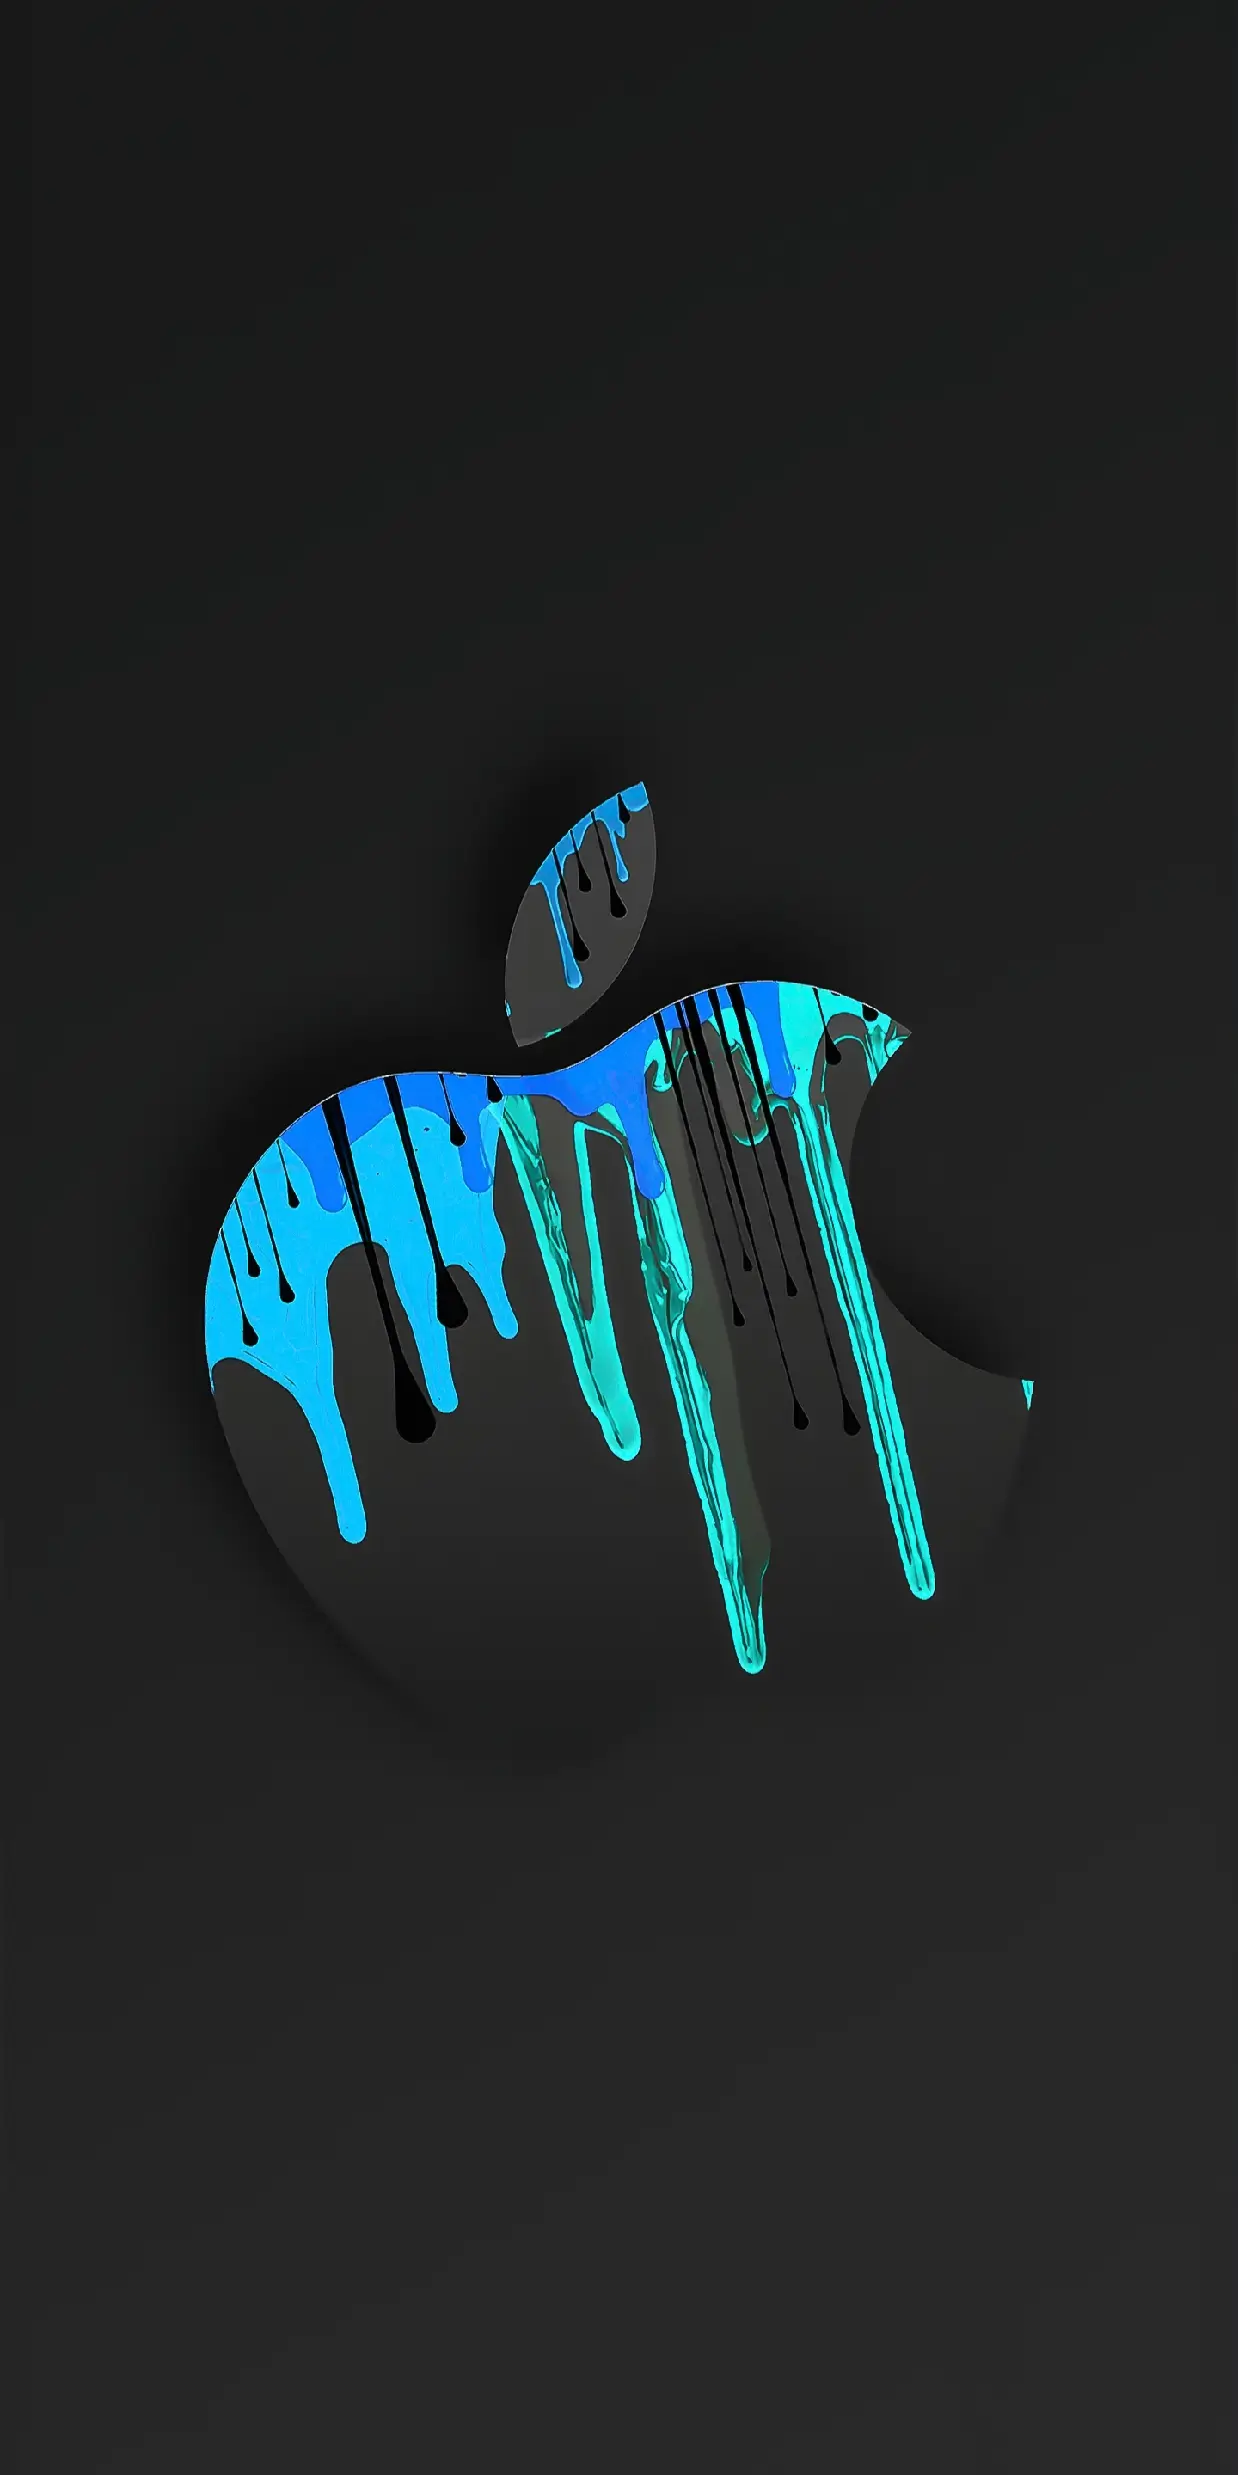 Apple logo wallpaper iPhone - 03